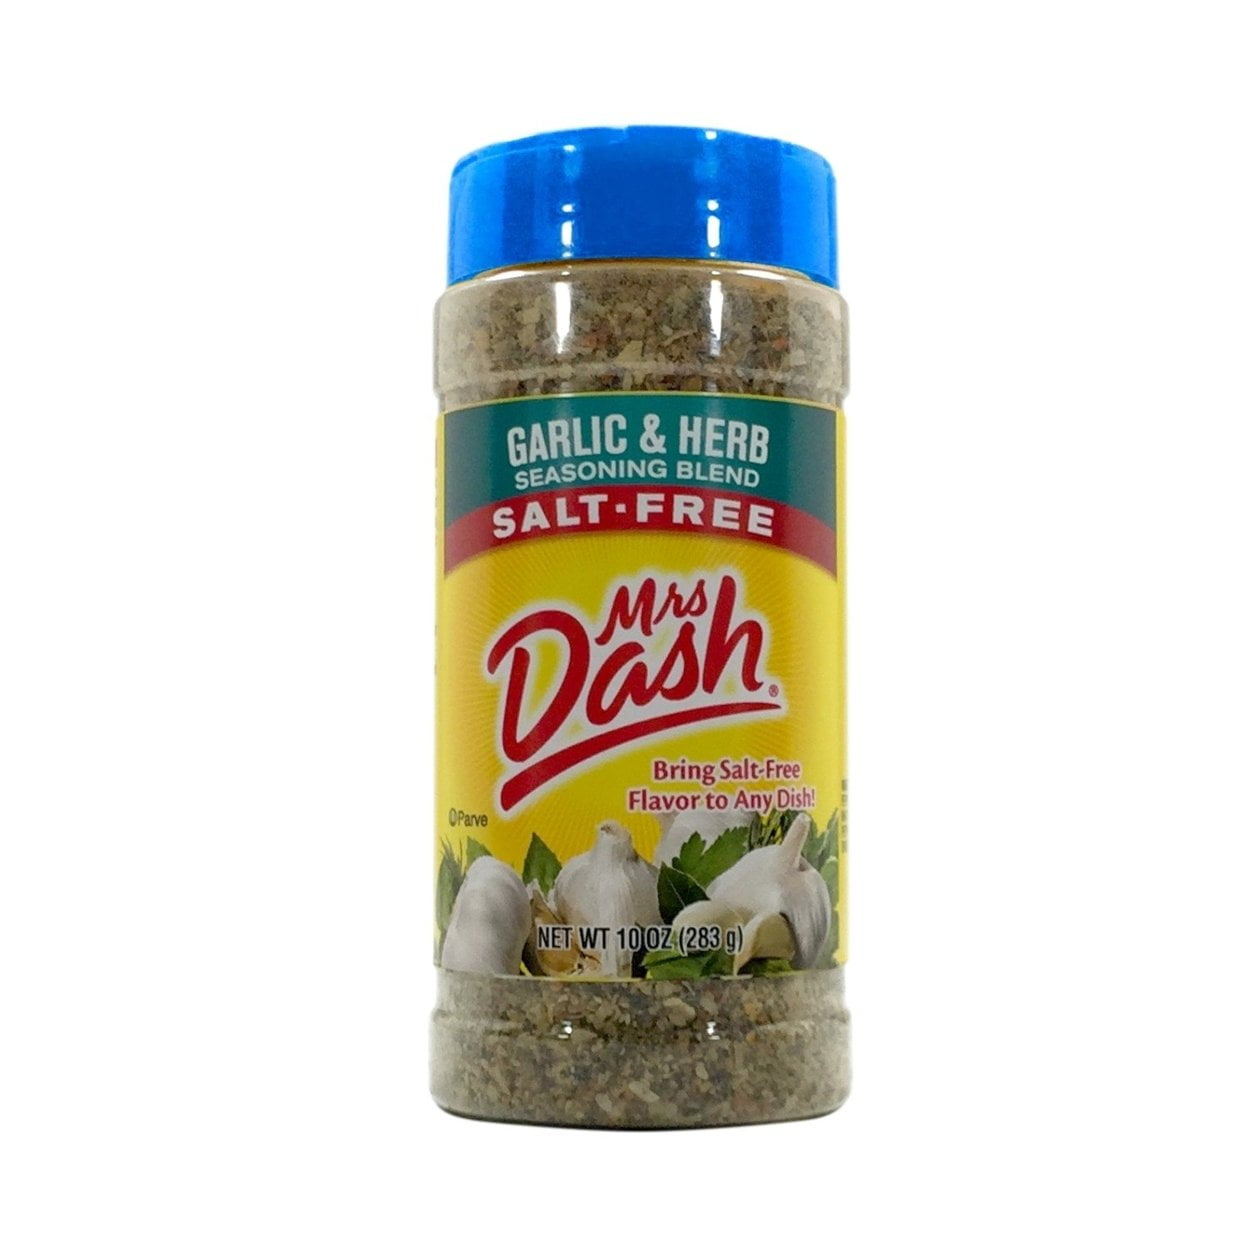 Mrs. Dash Combo All Natural Seasoning Blends 2.5 oz; Original,Onion&Herb,Garlic&Herb by Mrs. Dash